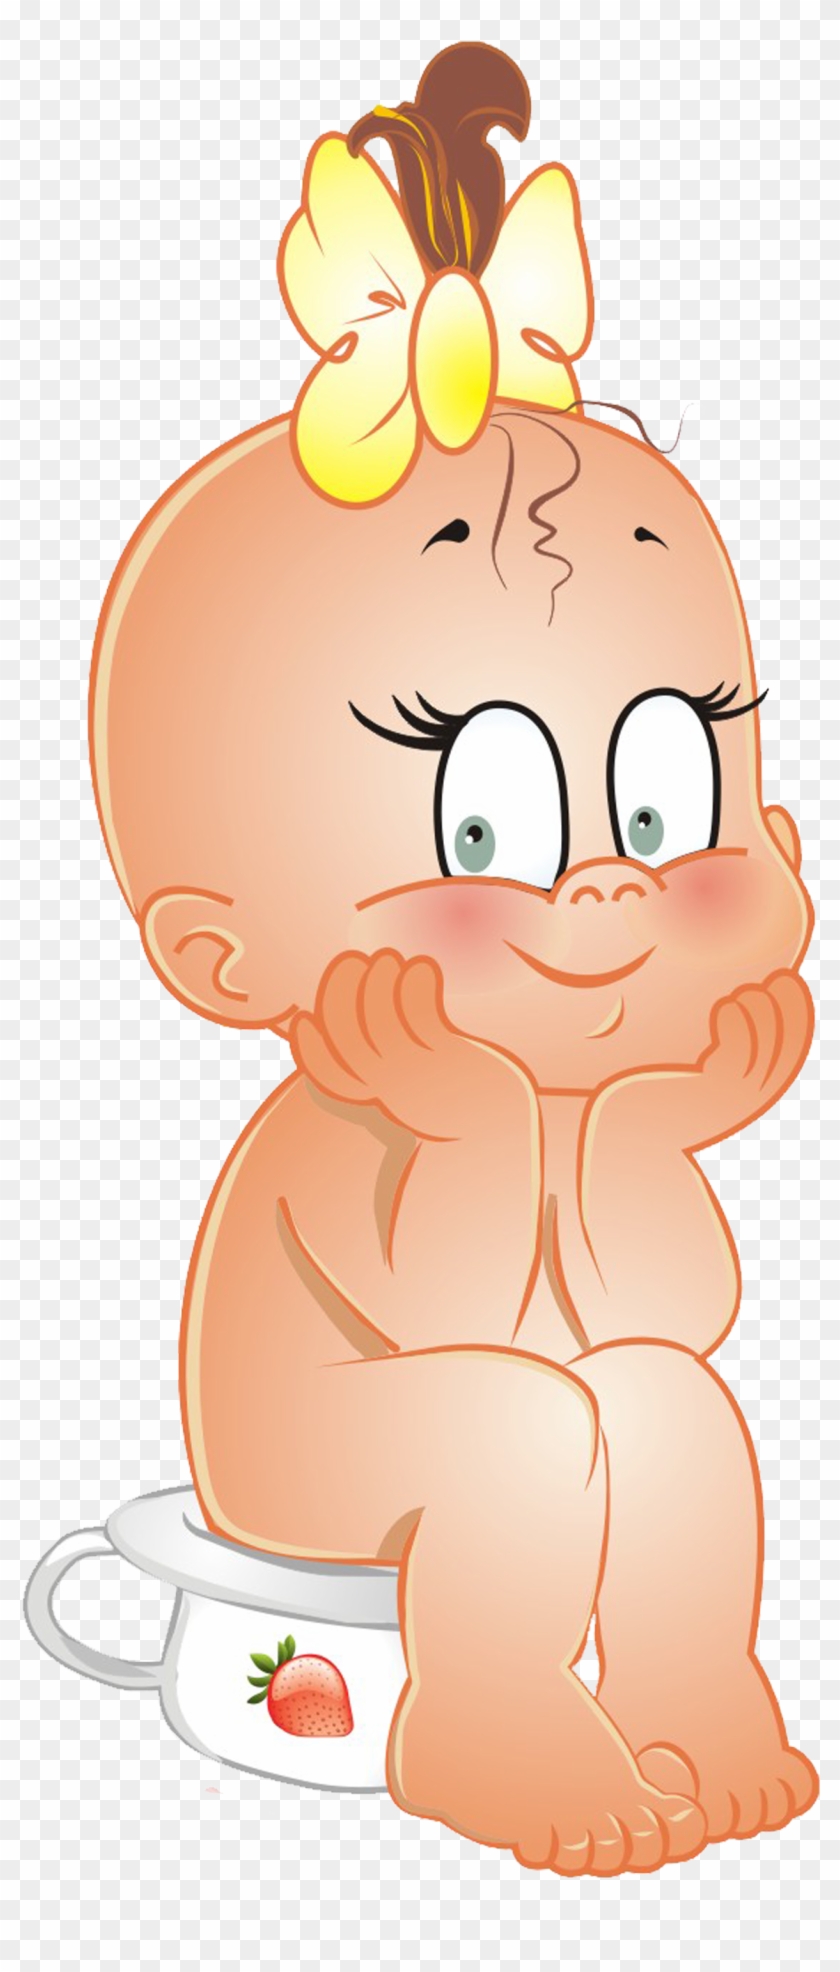 Photos Of Cartoon Baby Clip Art Medium Size - Cartoon Baby Girl #405627